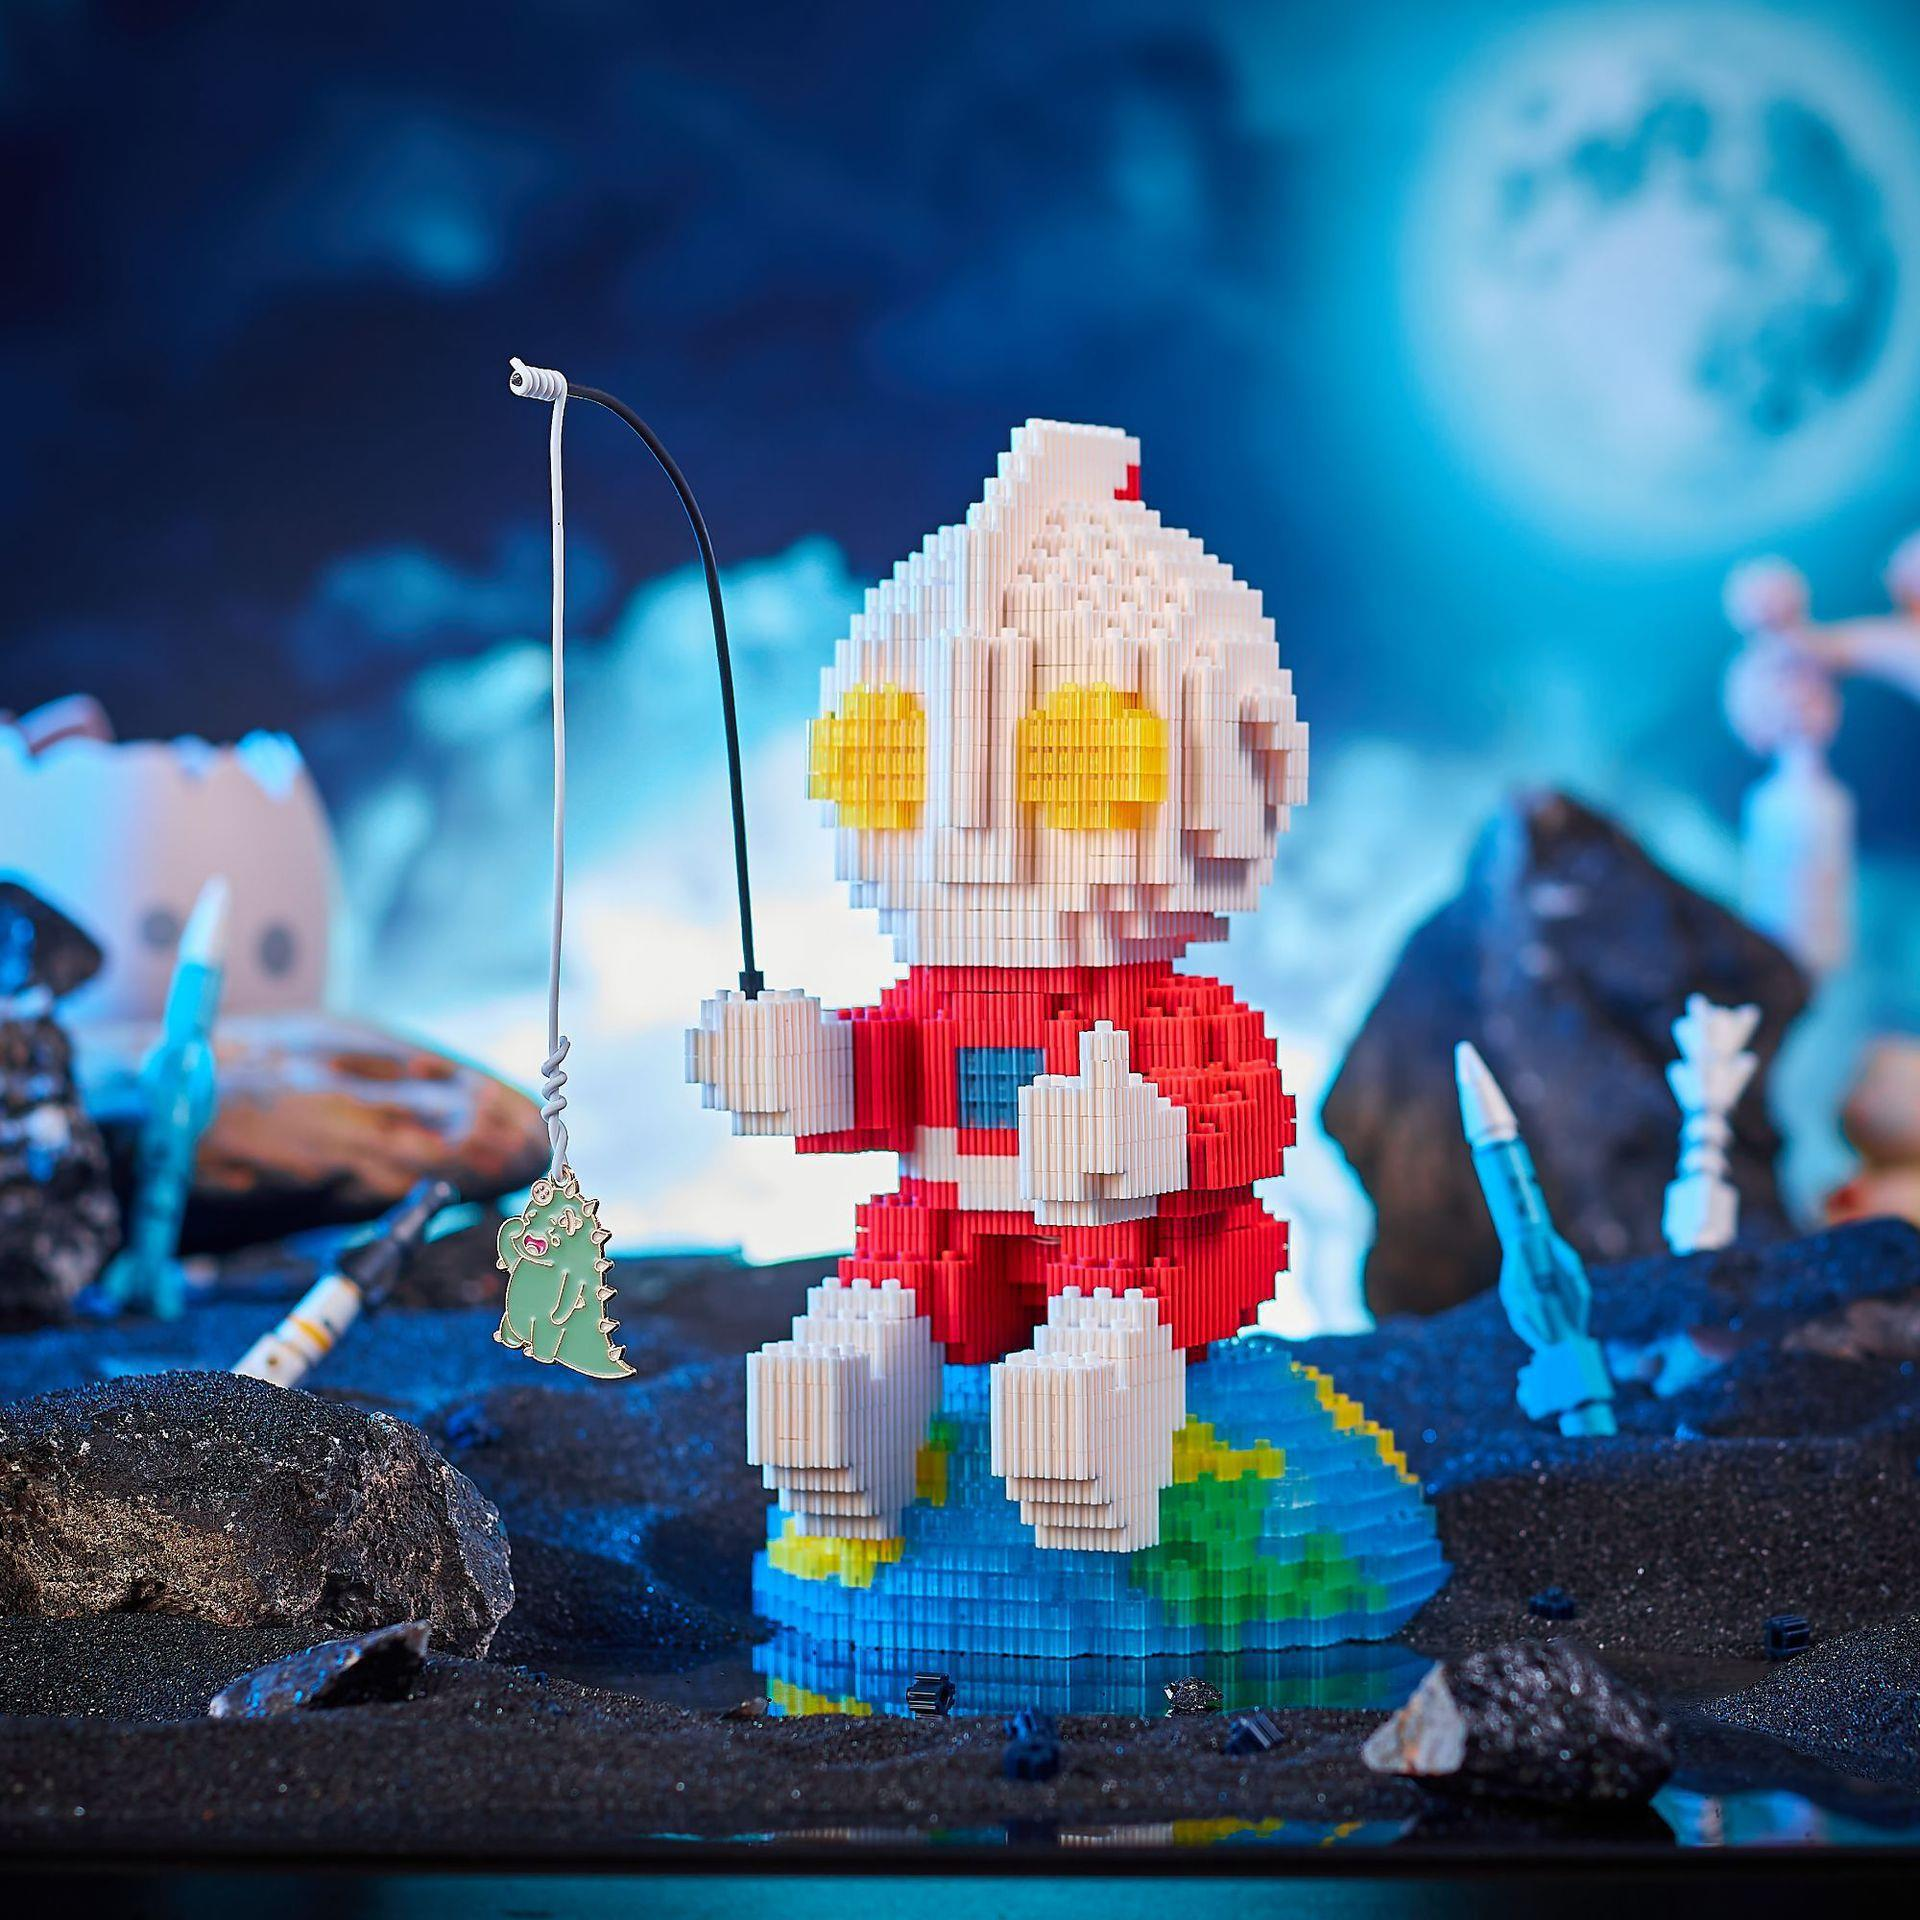 Mini Building Blocks Astronaut Ultraman Lego Toys for Children